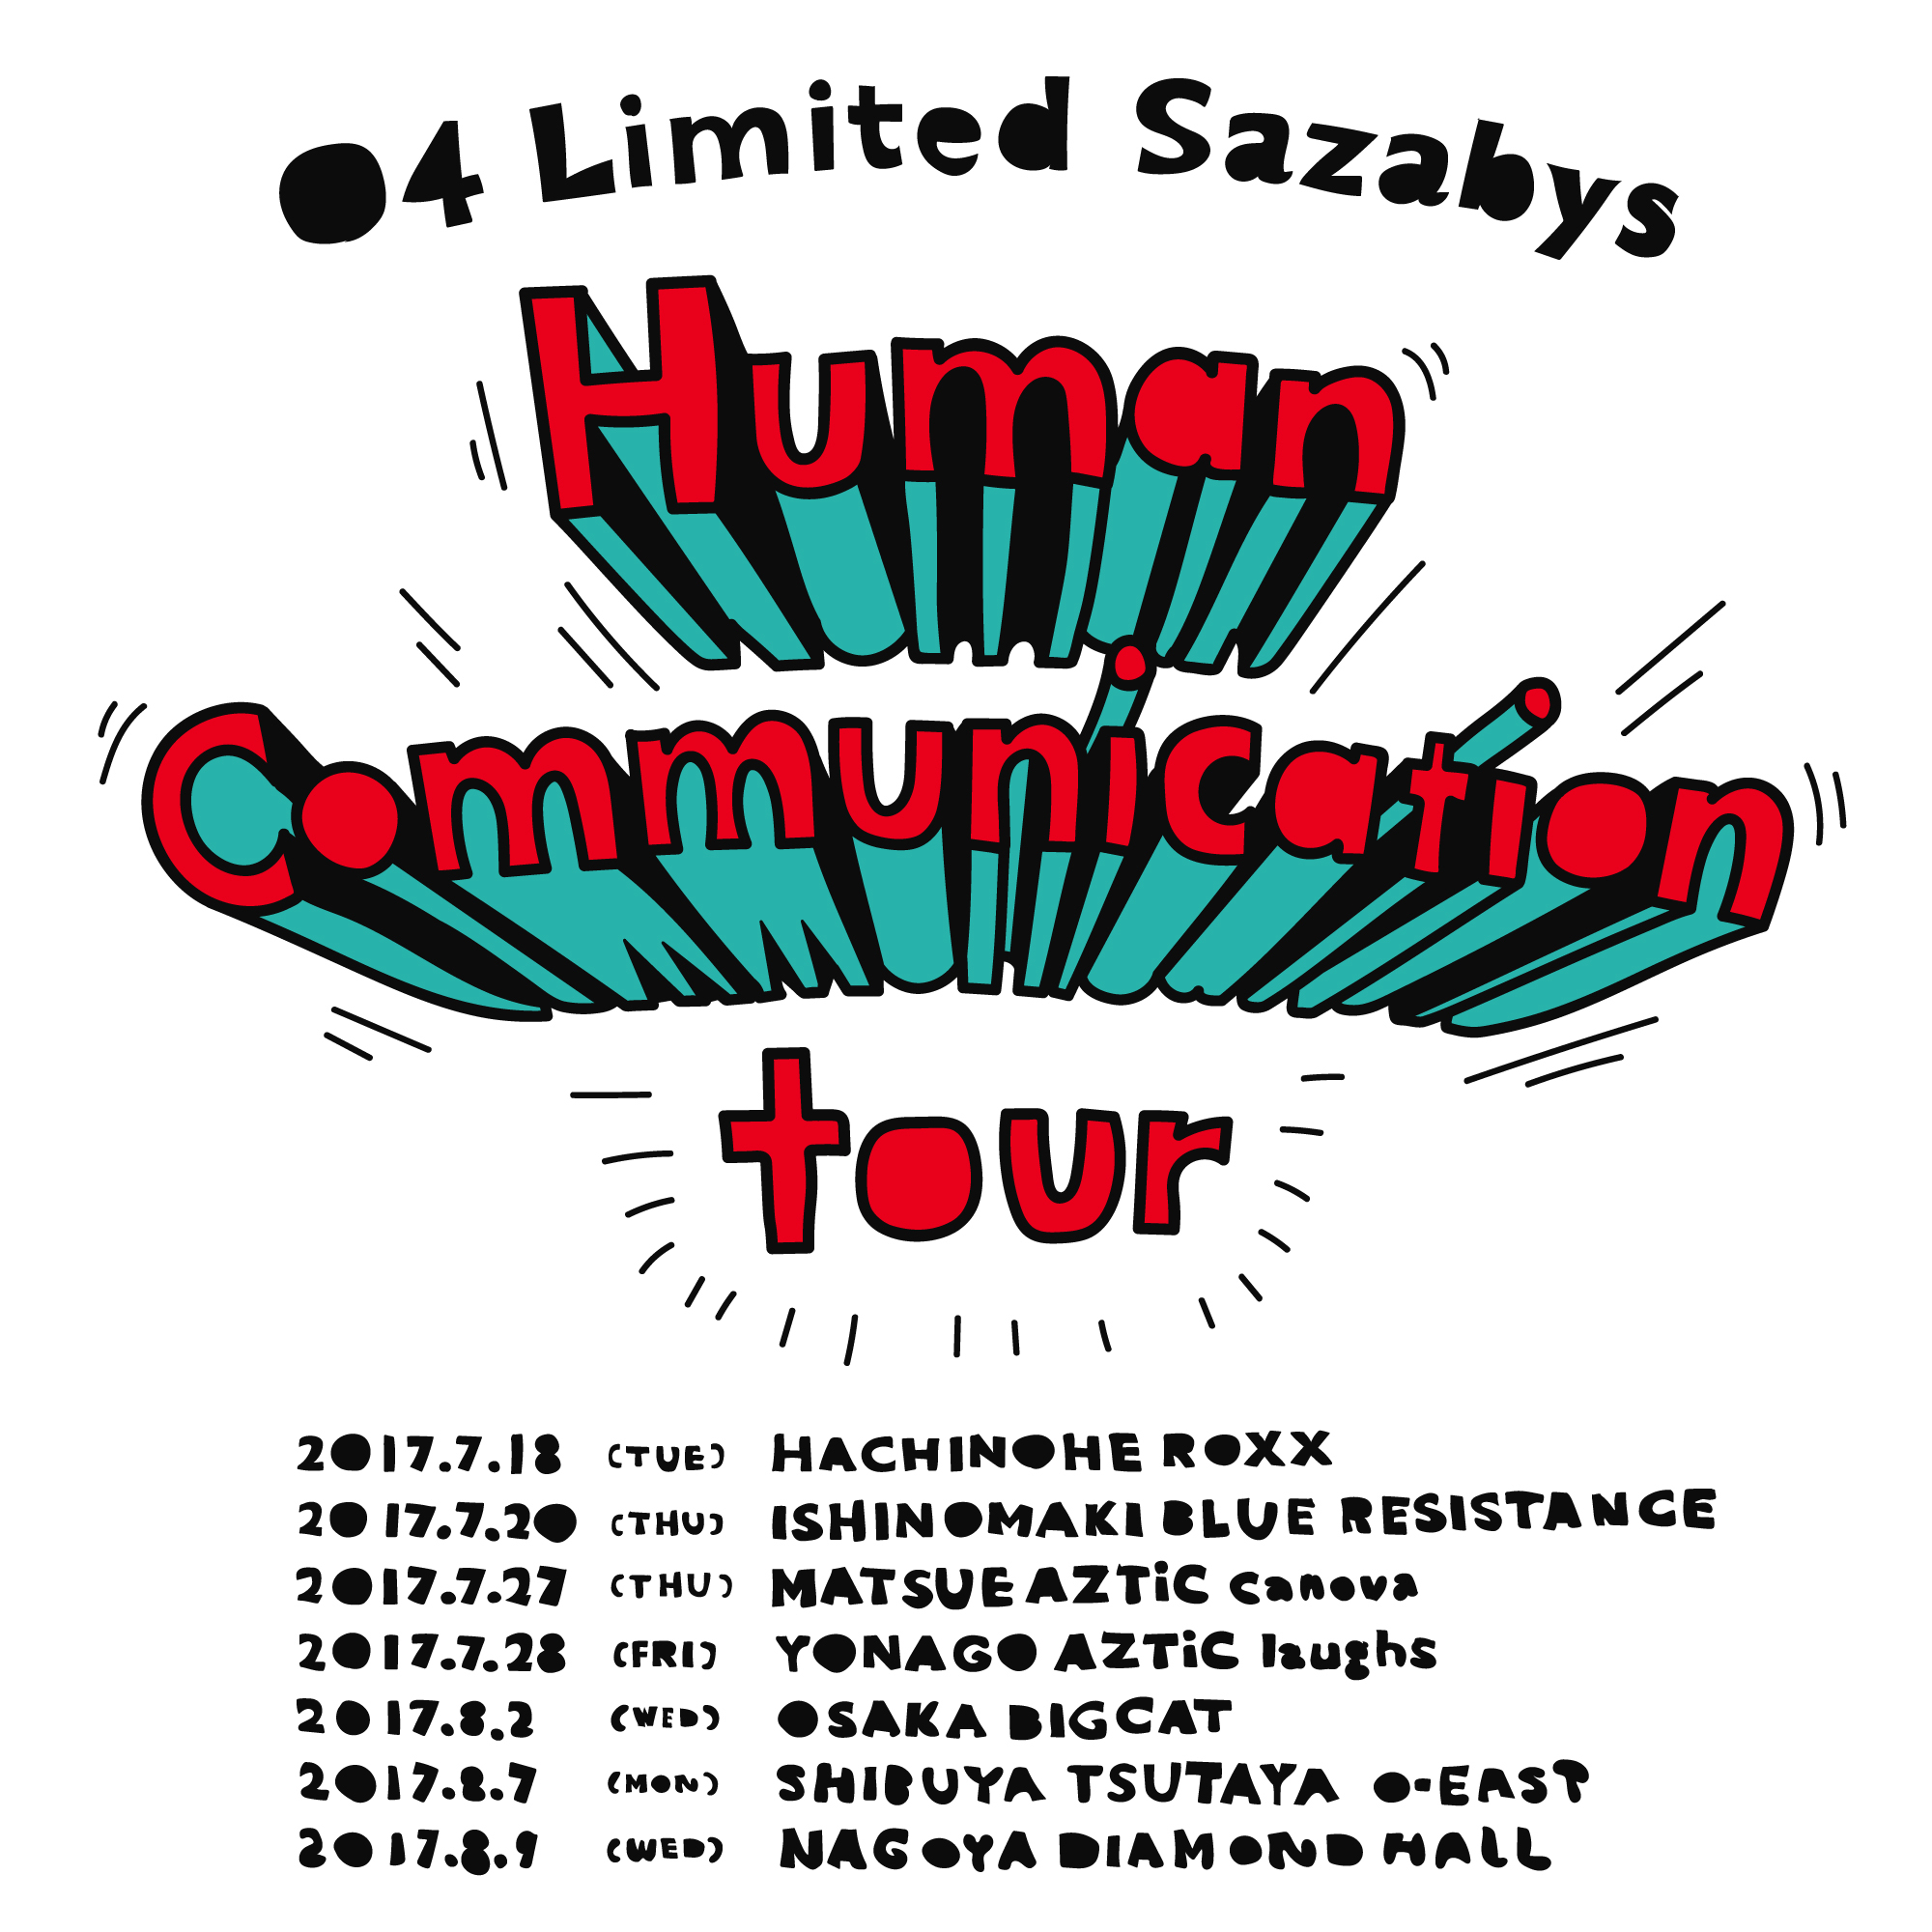 04 Limited Sazabys presents「Human Communication tour」